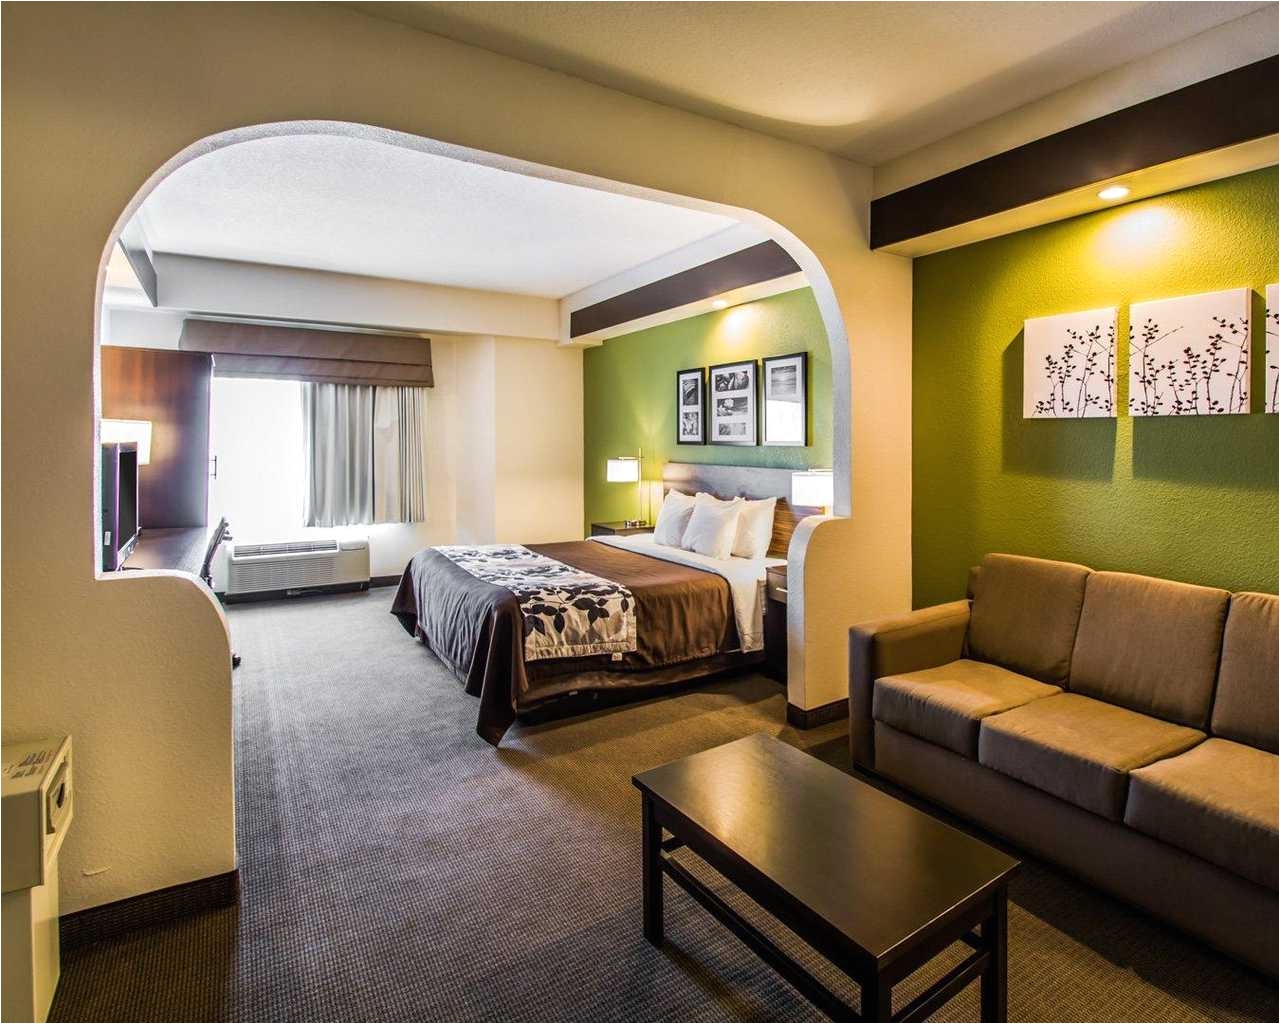 Hotels with 2 Bedroom Suites Near Disney World Sleep Inn orlando Airport Fl Near by Seaworld islands Of Adventure